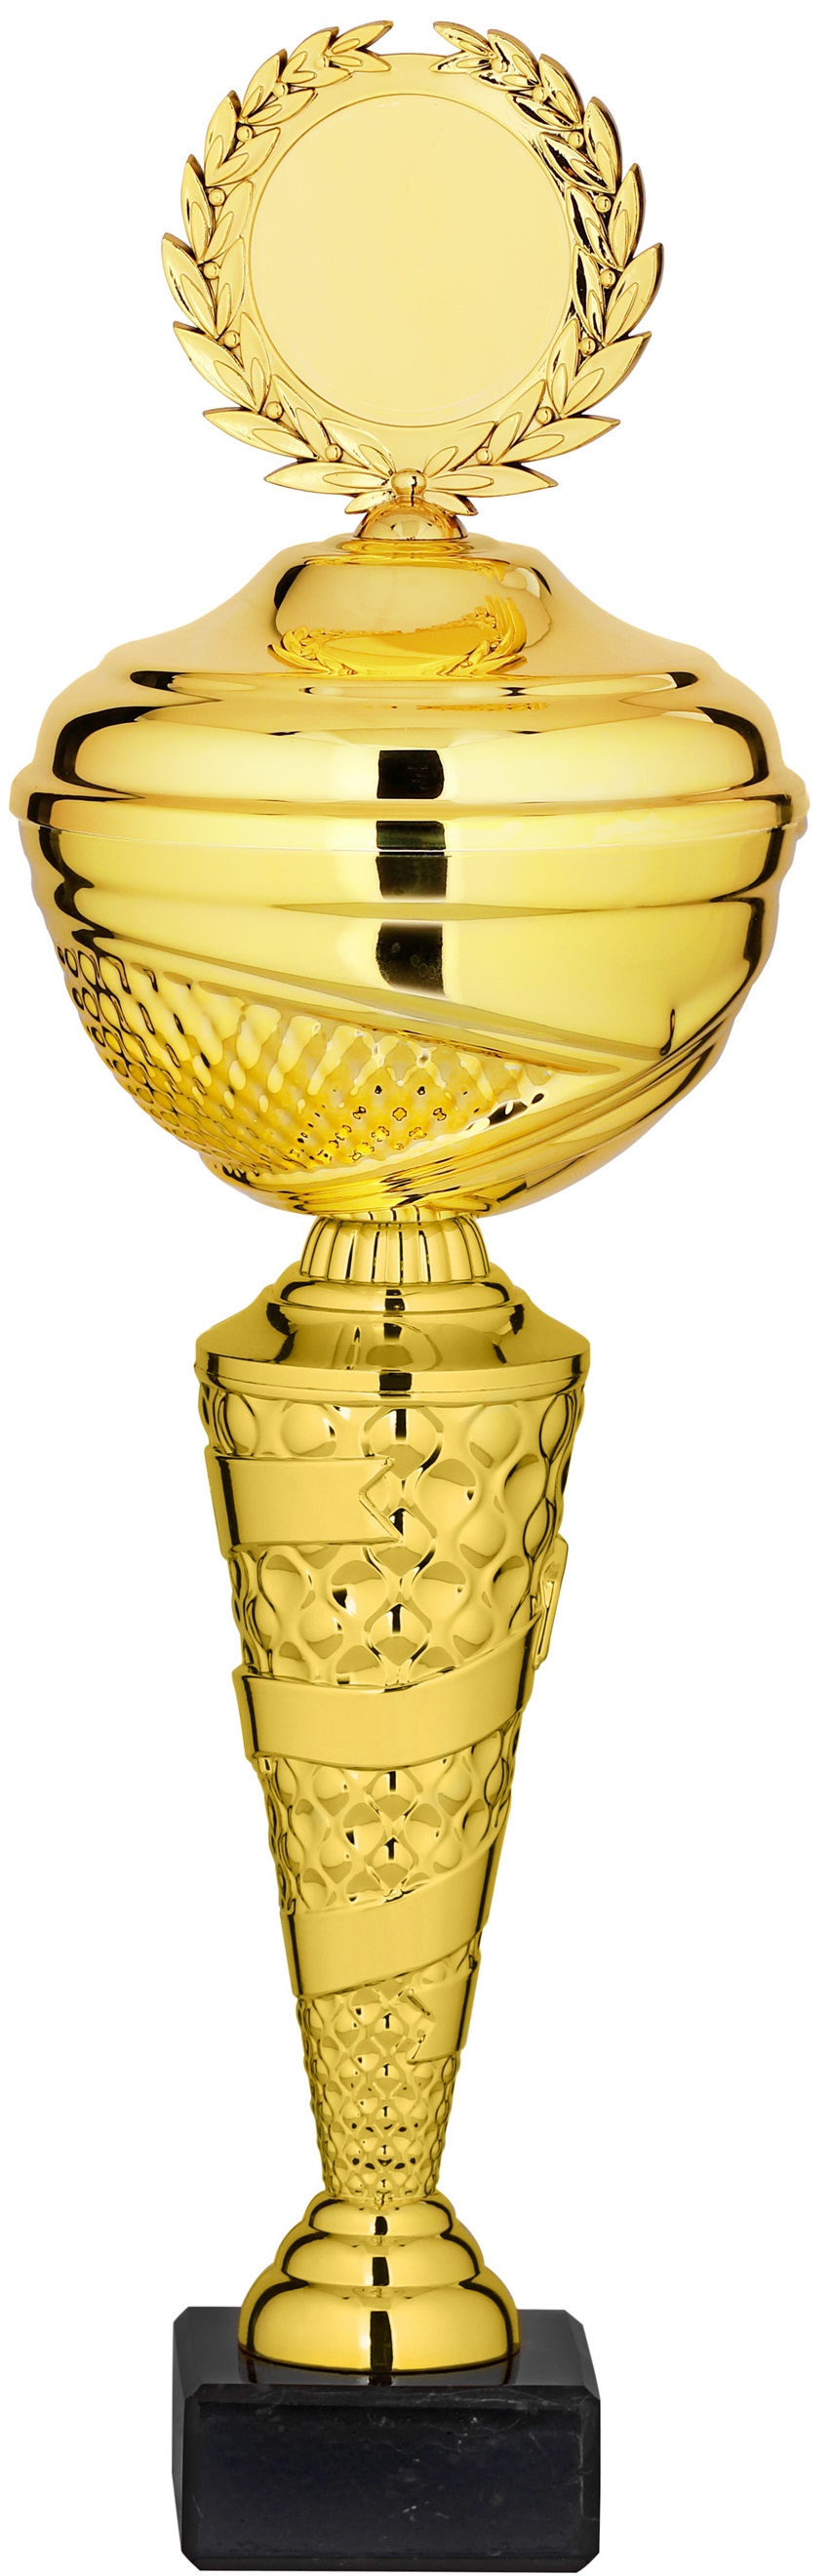 Pokal P600-Gold  inkl. Gravur und Emblem 35,5 cm